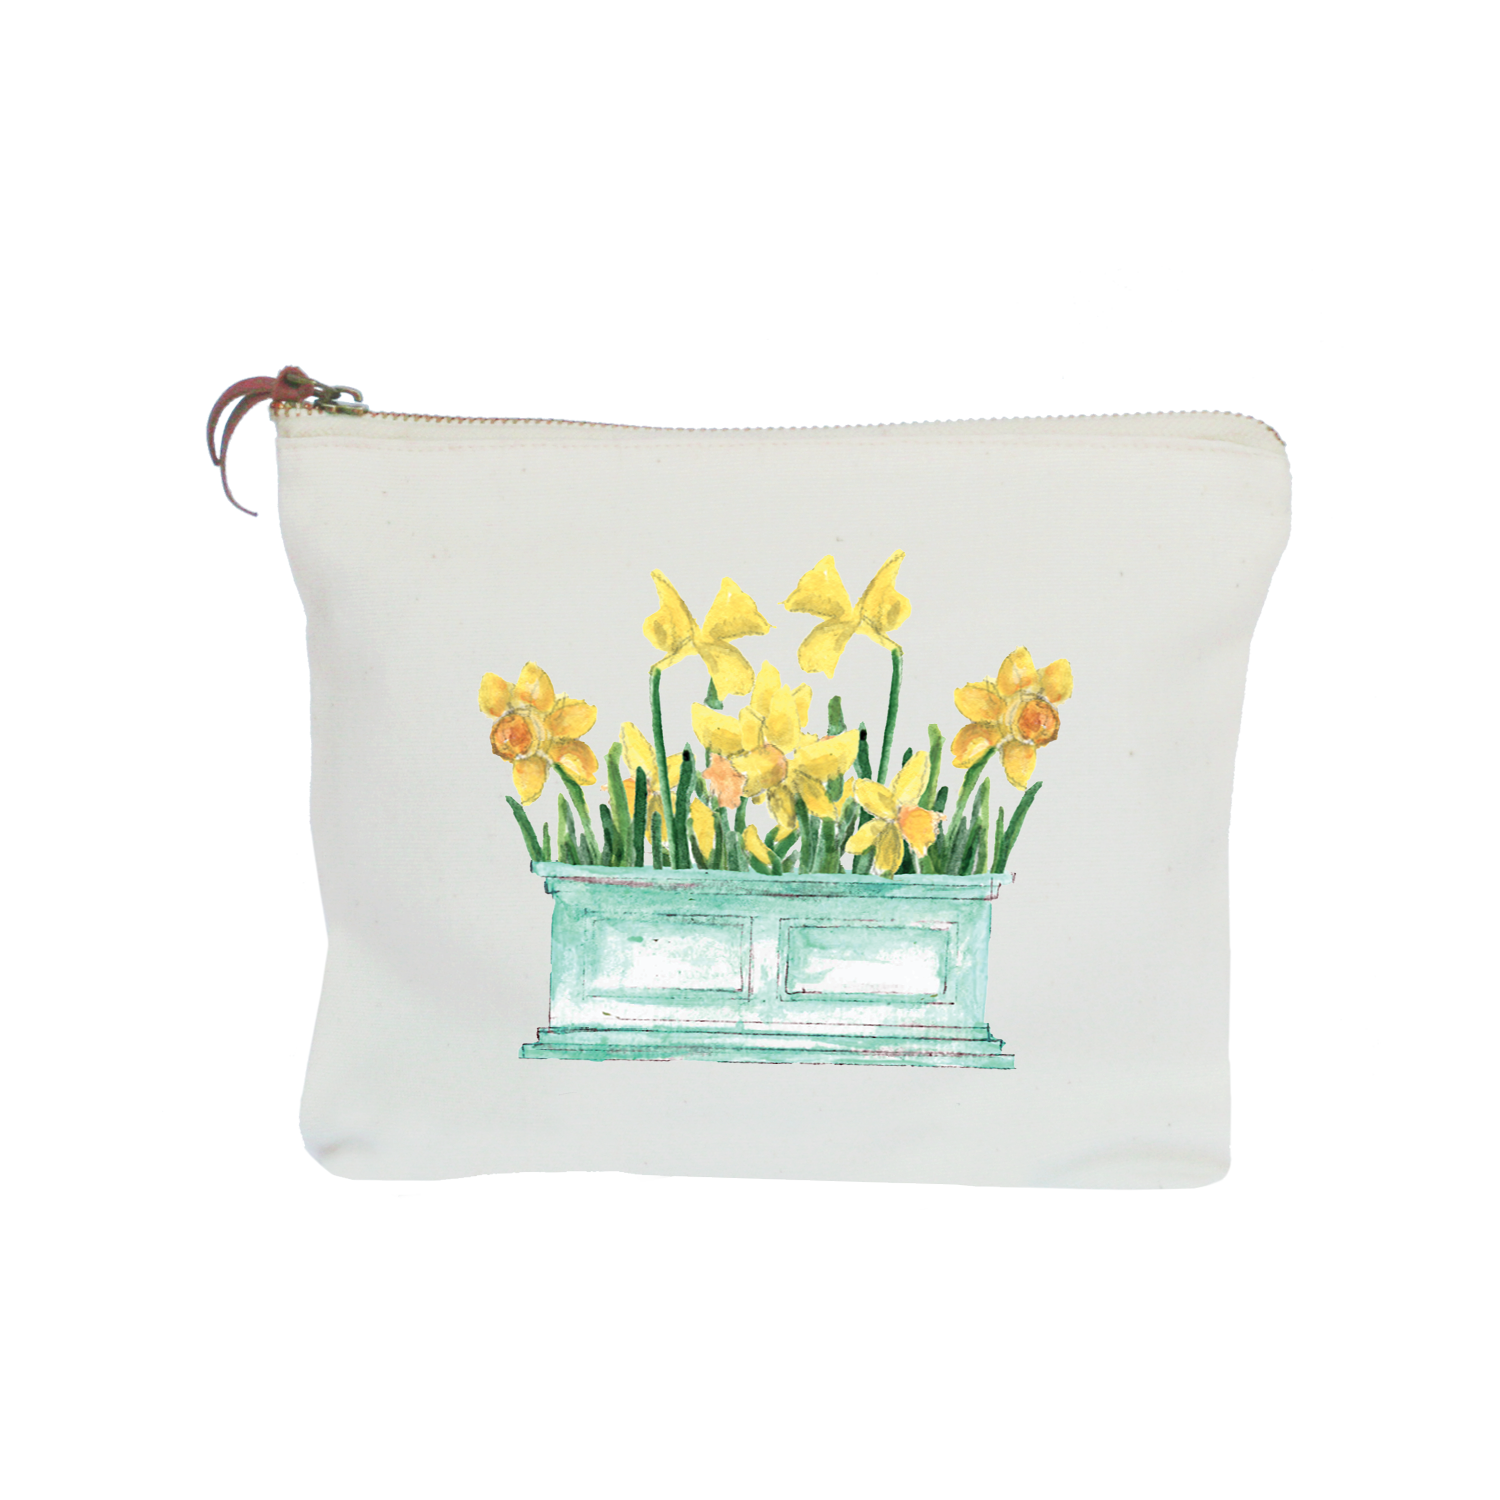 daffodils in flower box zipper pouch